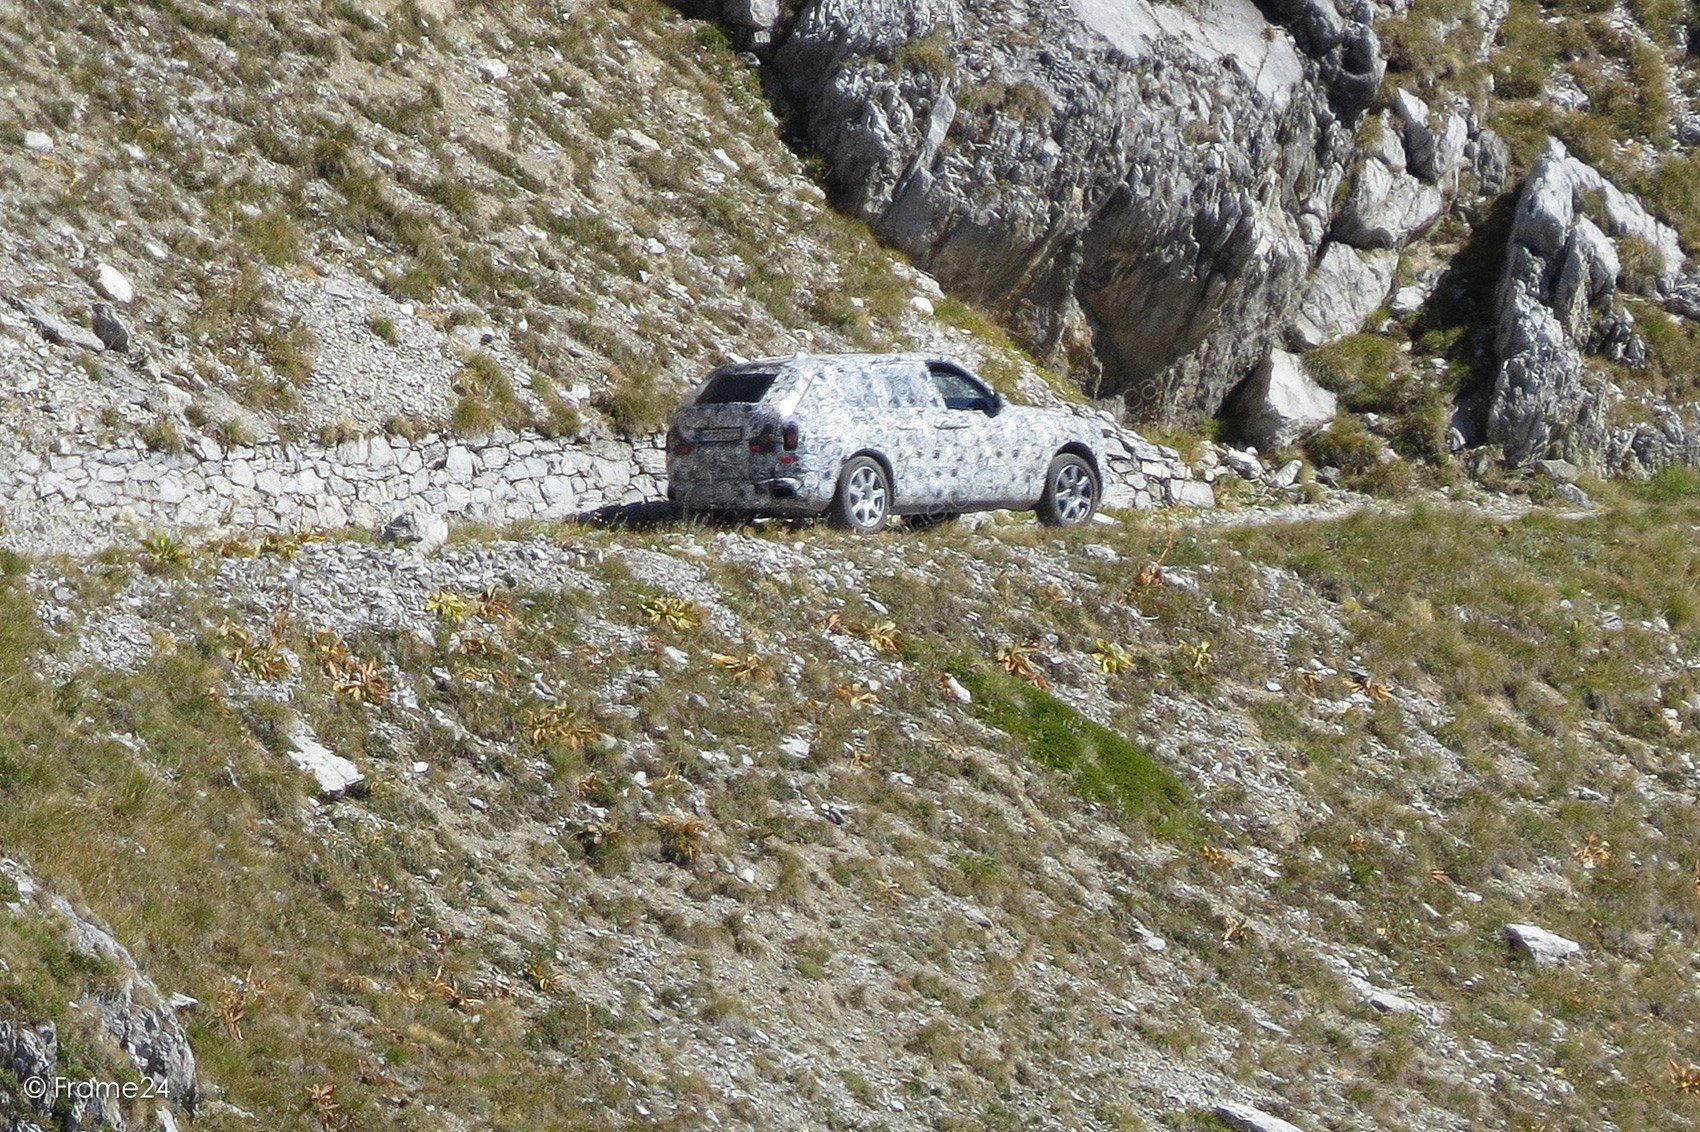 Mountain climbing in a Rolls-Royce SUV